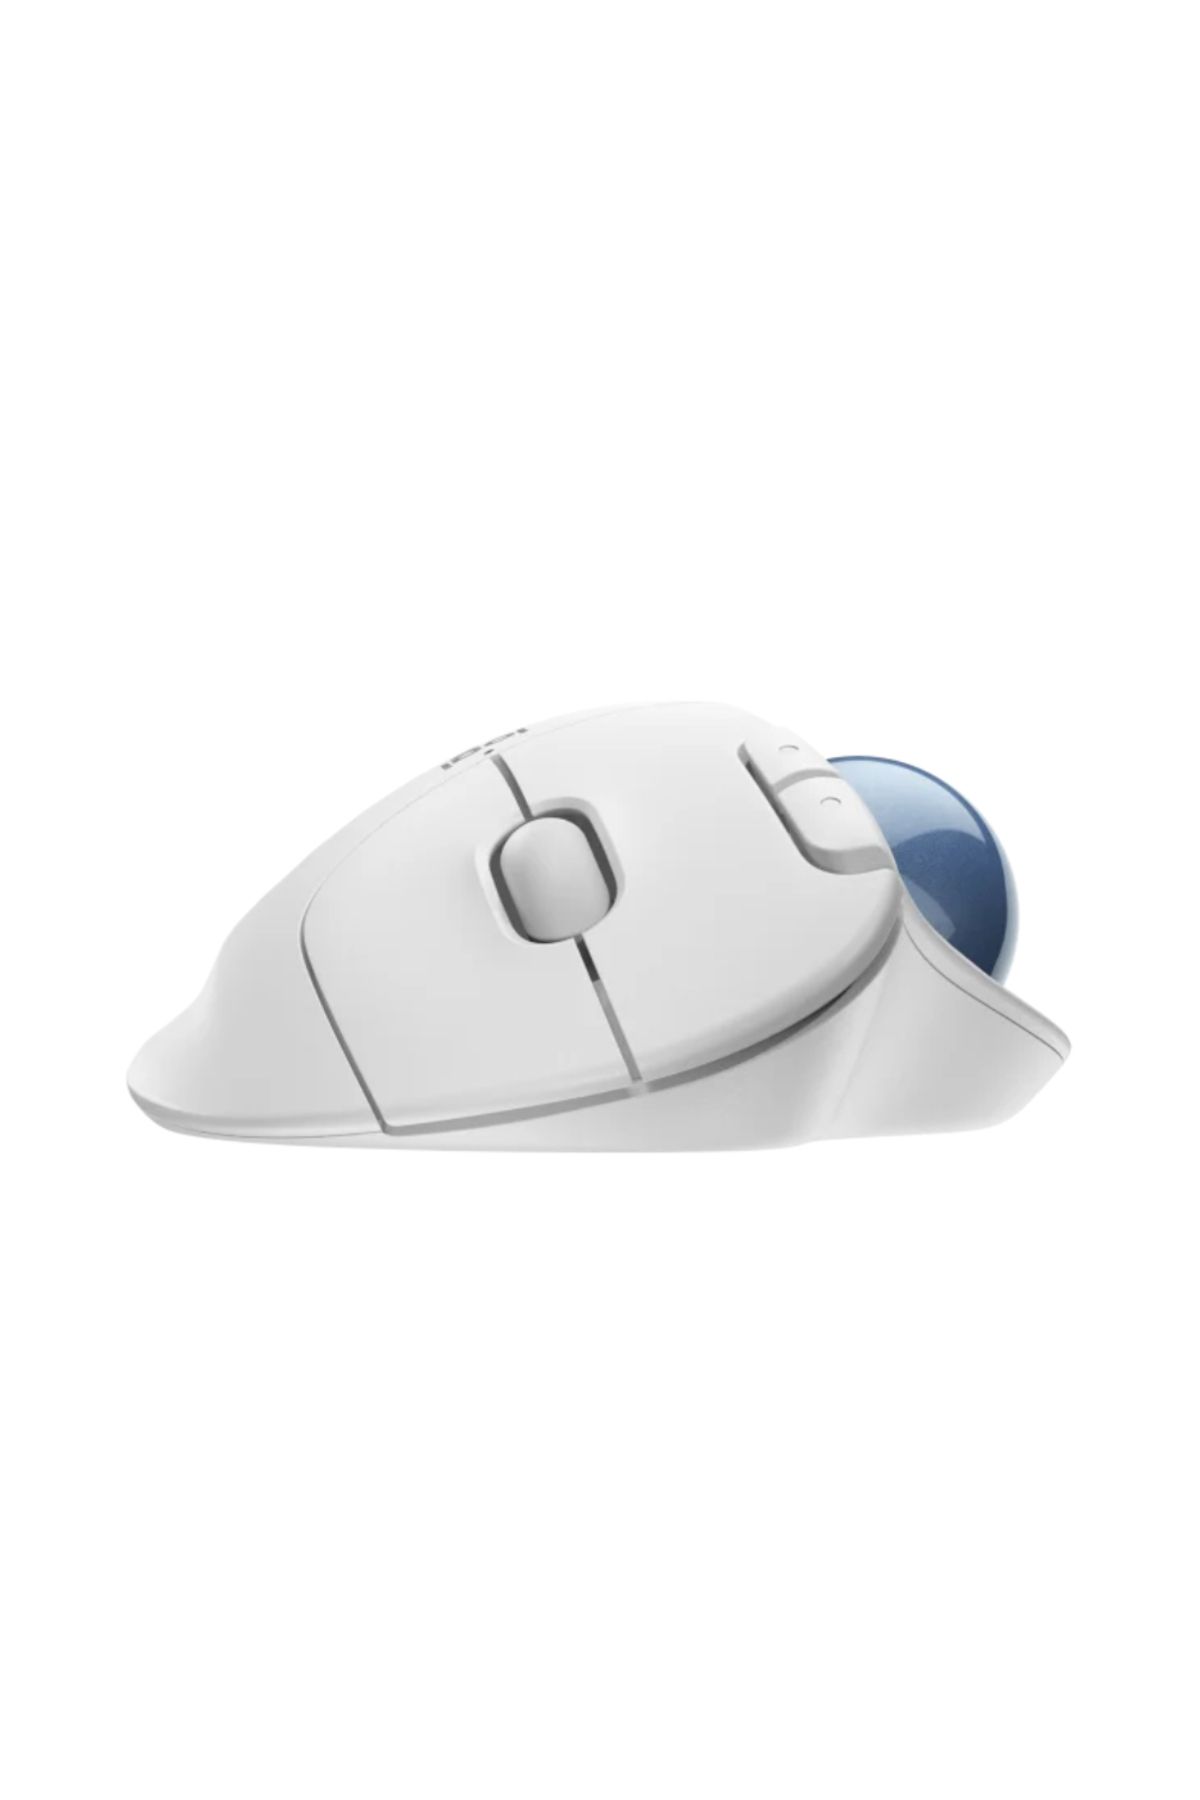 logitech M575 910-005870 Ergonomik Trackball Mouse Beyaz